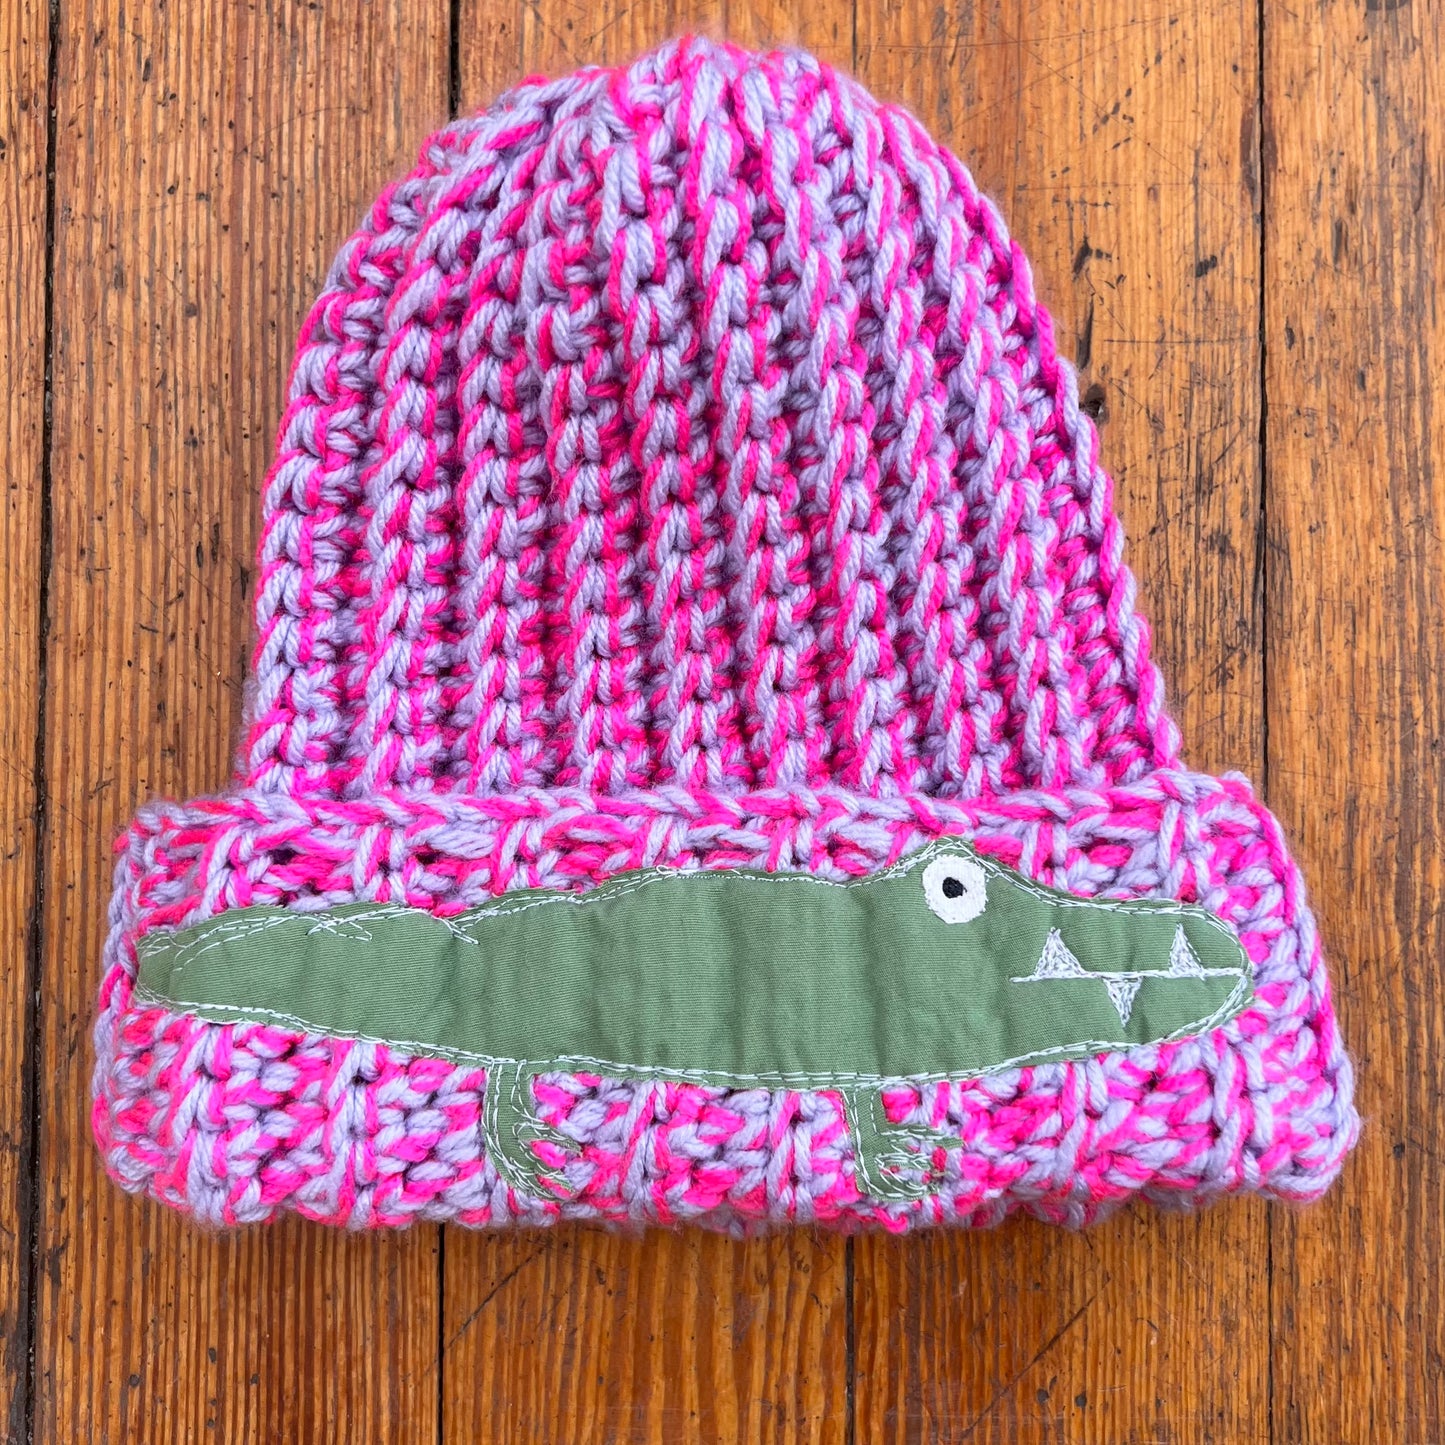 Pink knit gator beanie